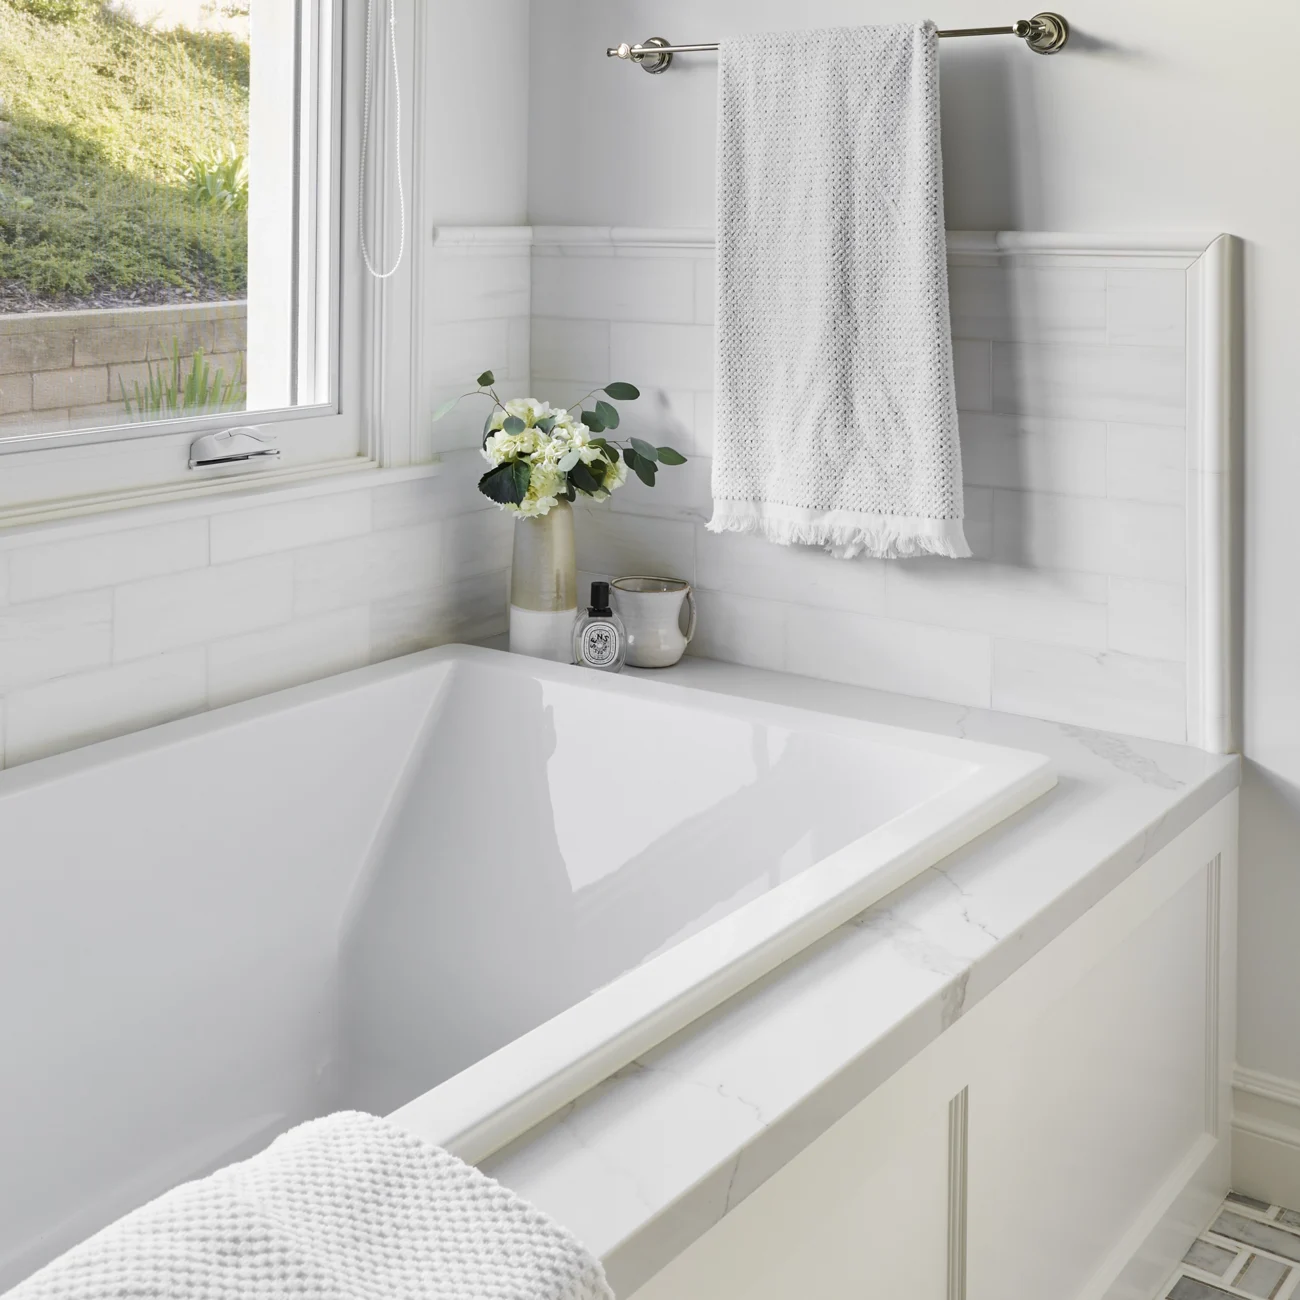 Christine Vroom Interiors Vigilance | bathroom with soaker tub and window